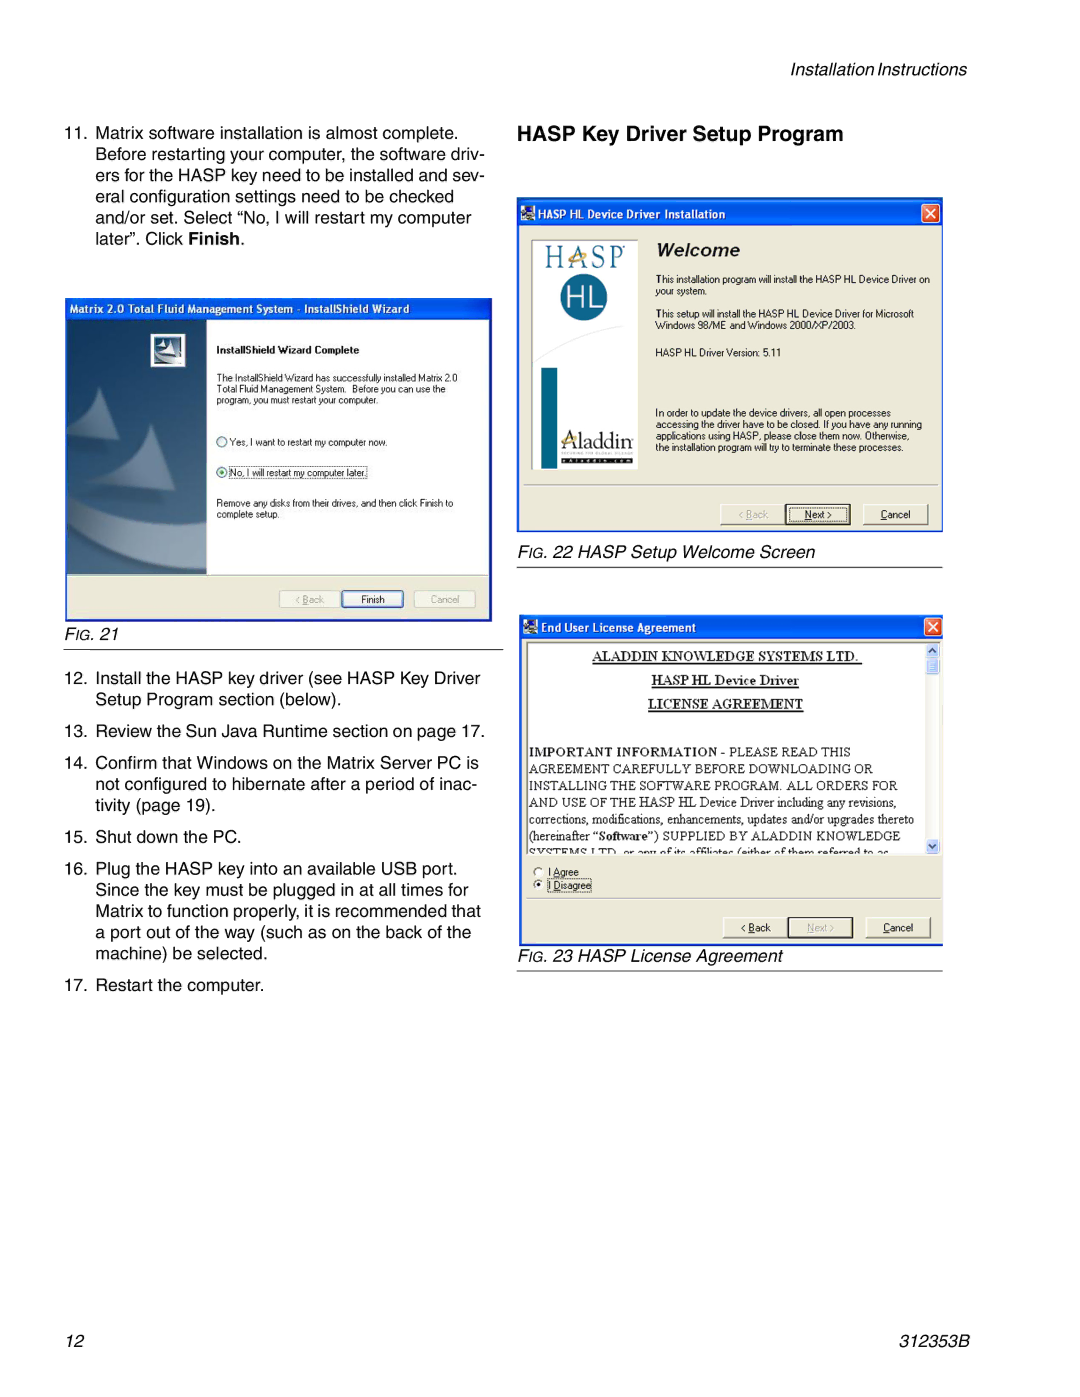 Graco 312353B instruction manual Hasp Key Driver Setup Program, Hasp Setup Welcome Screen 